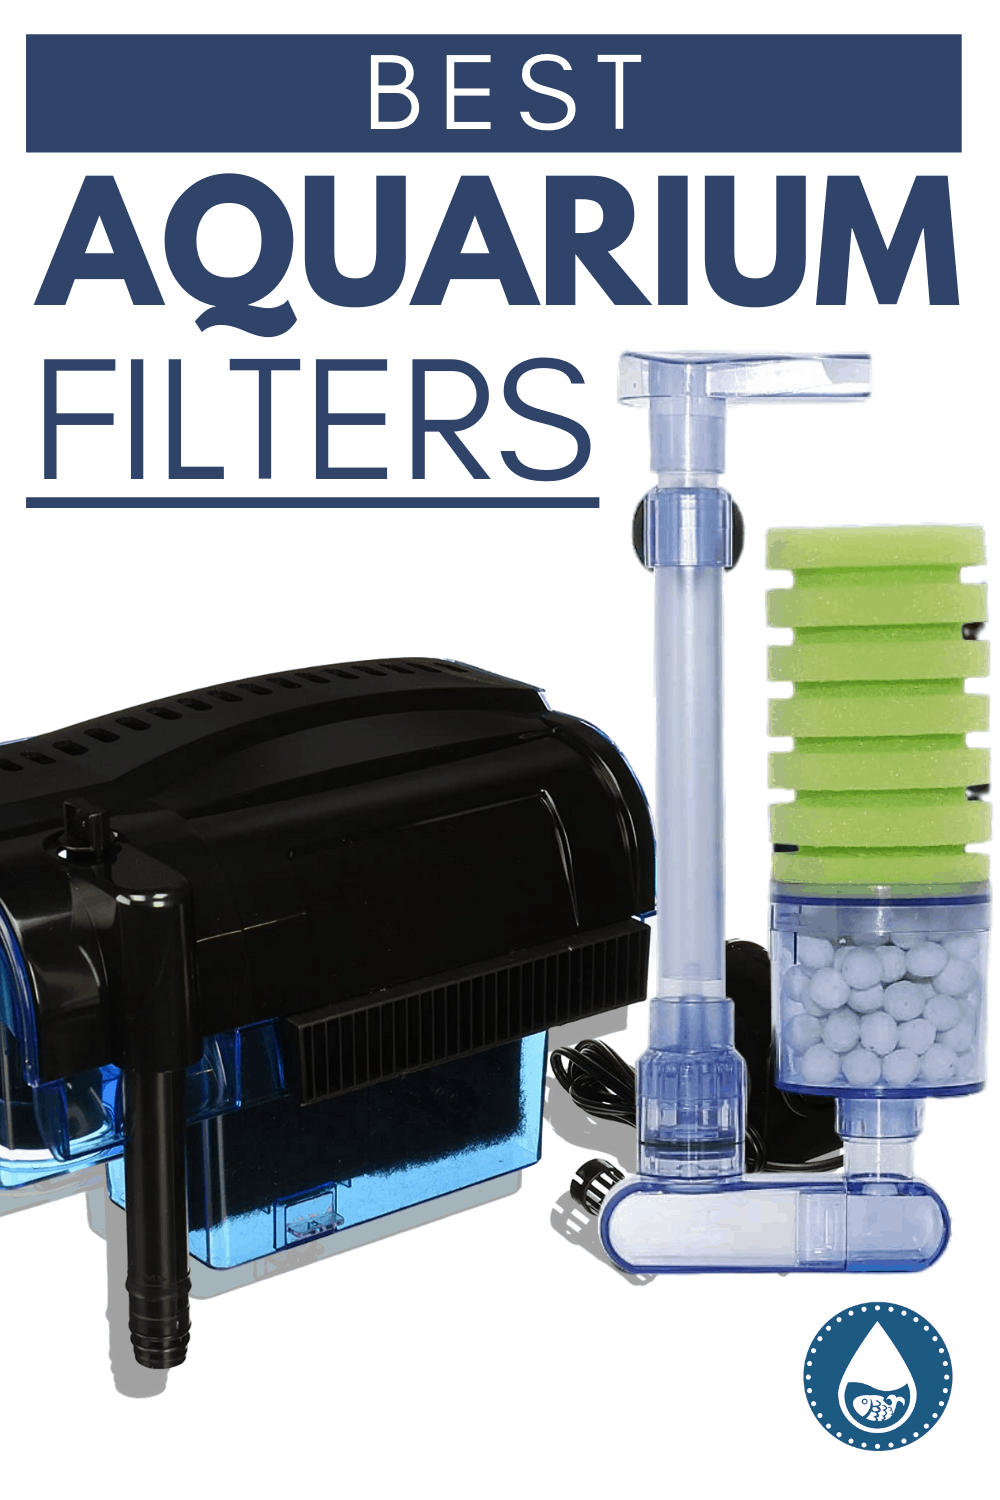 Best Aquarium Filters - Top Picks For A Clean Tank